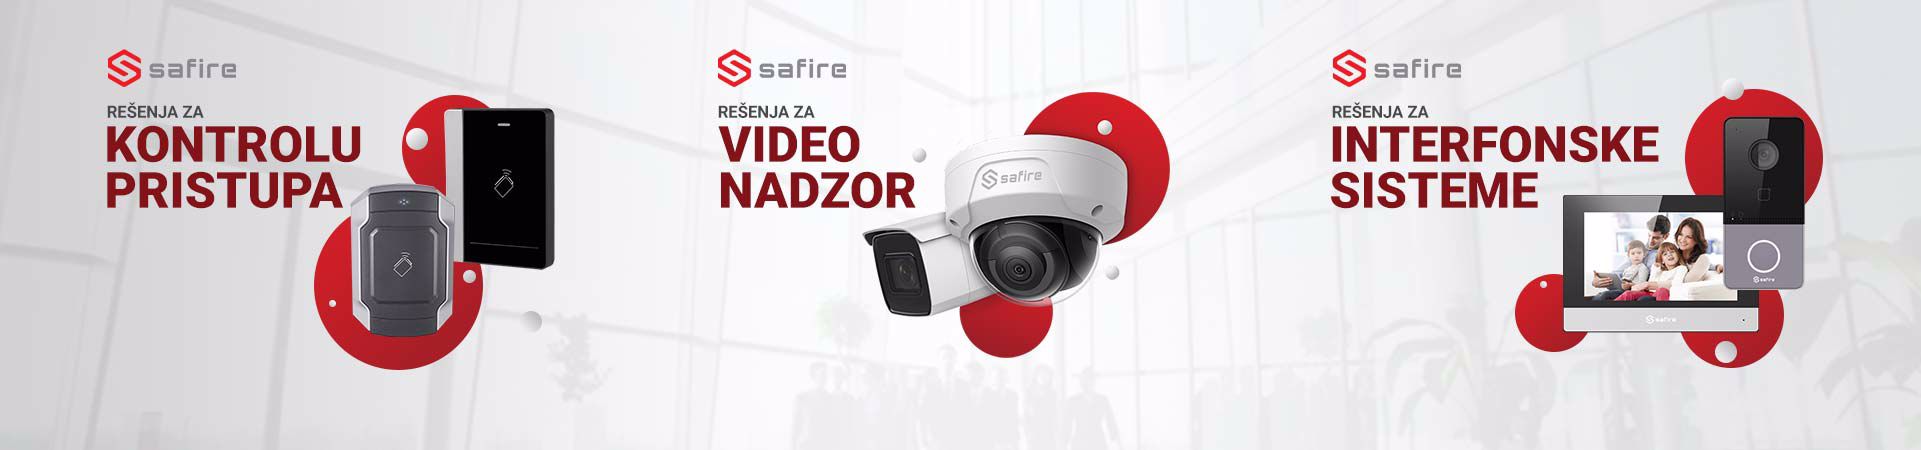 Safire brend - Safire video nadzor, kontrola pristupa i Interfoni